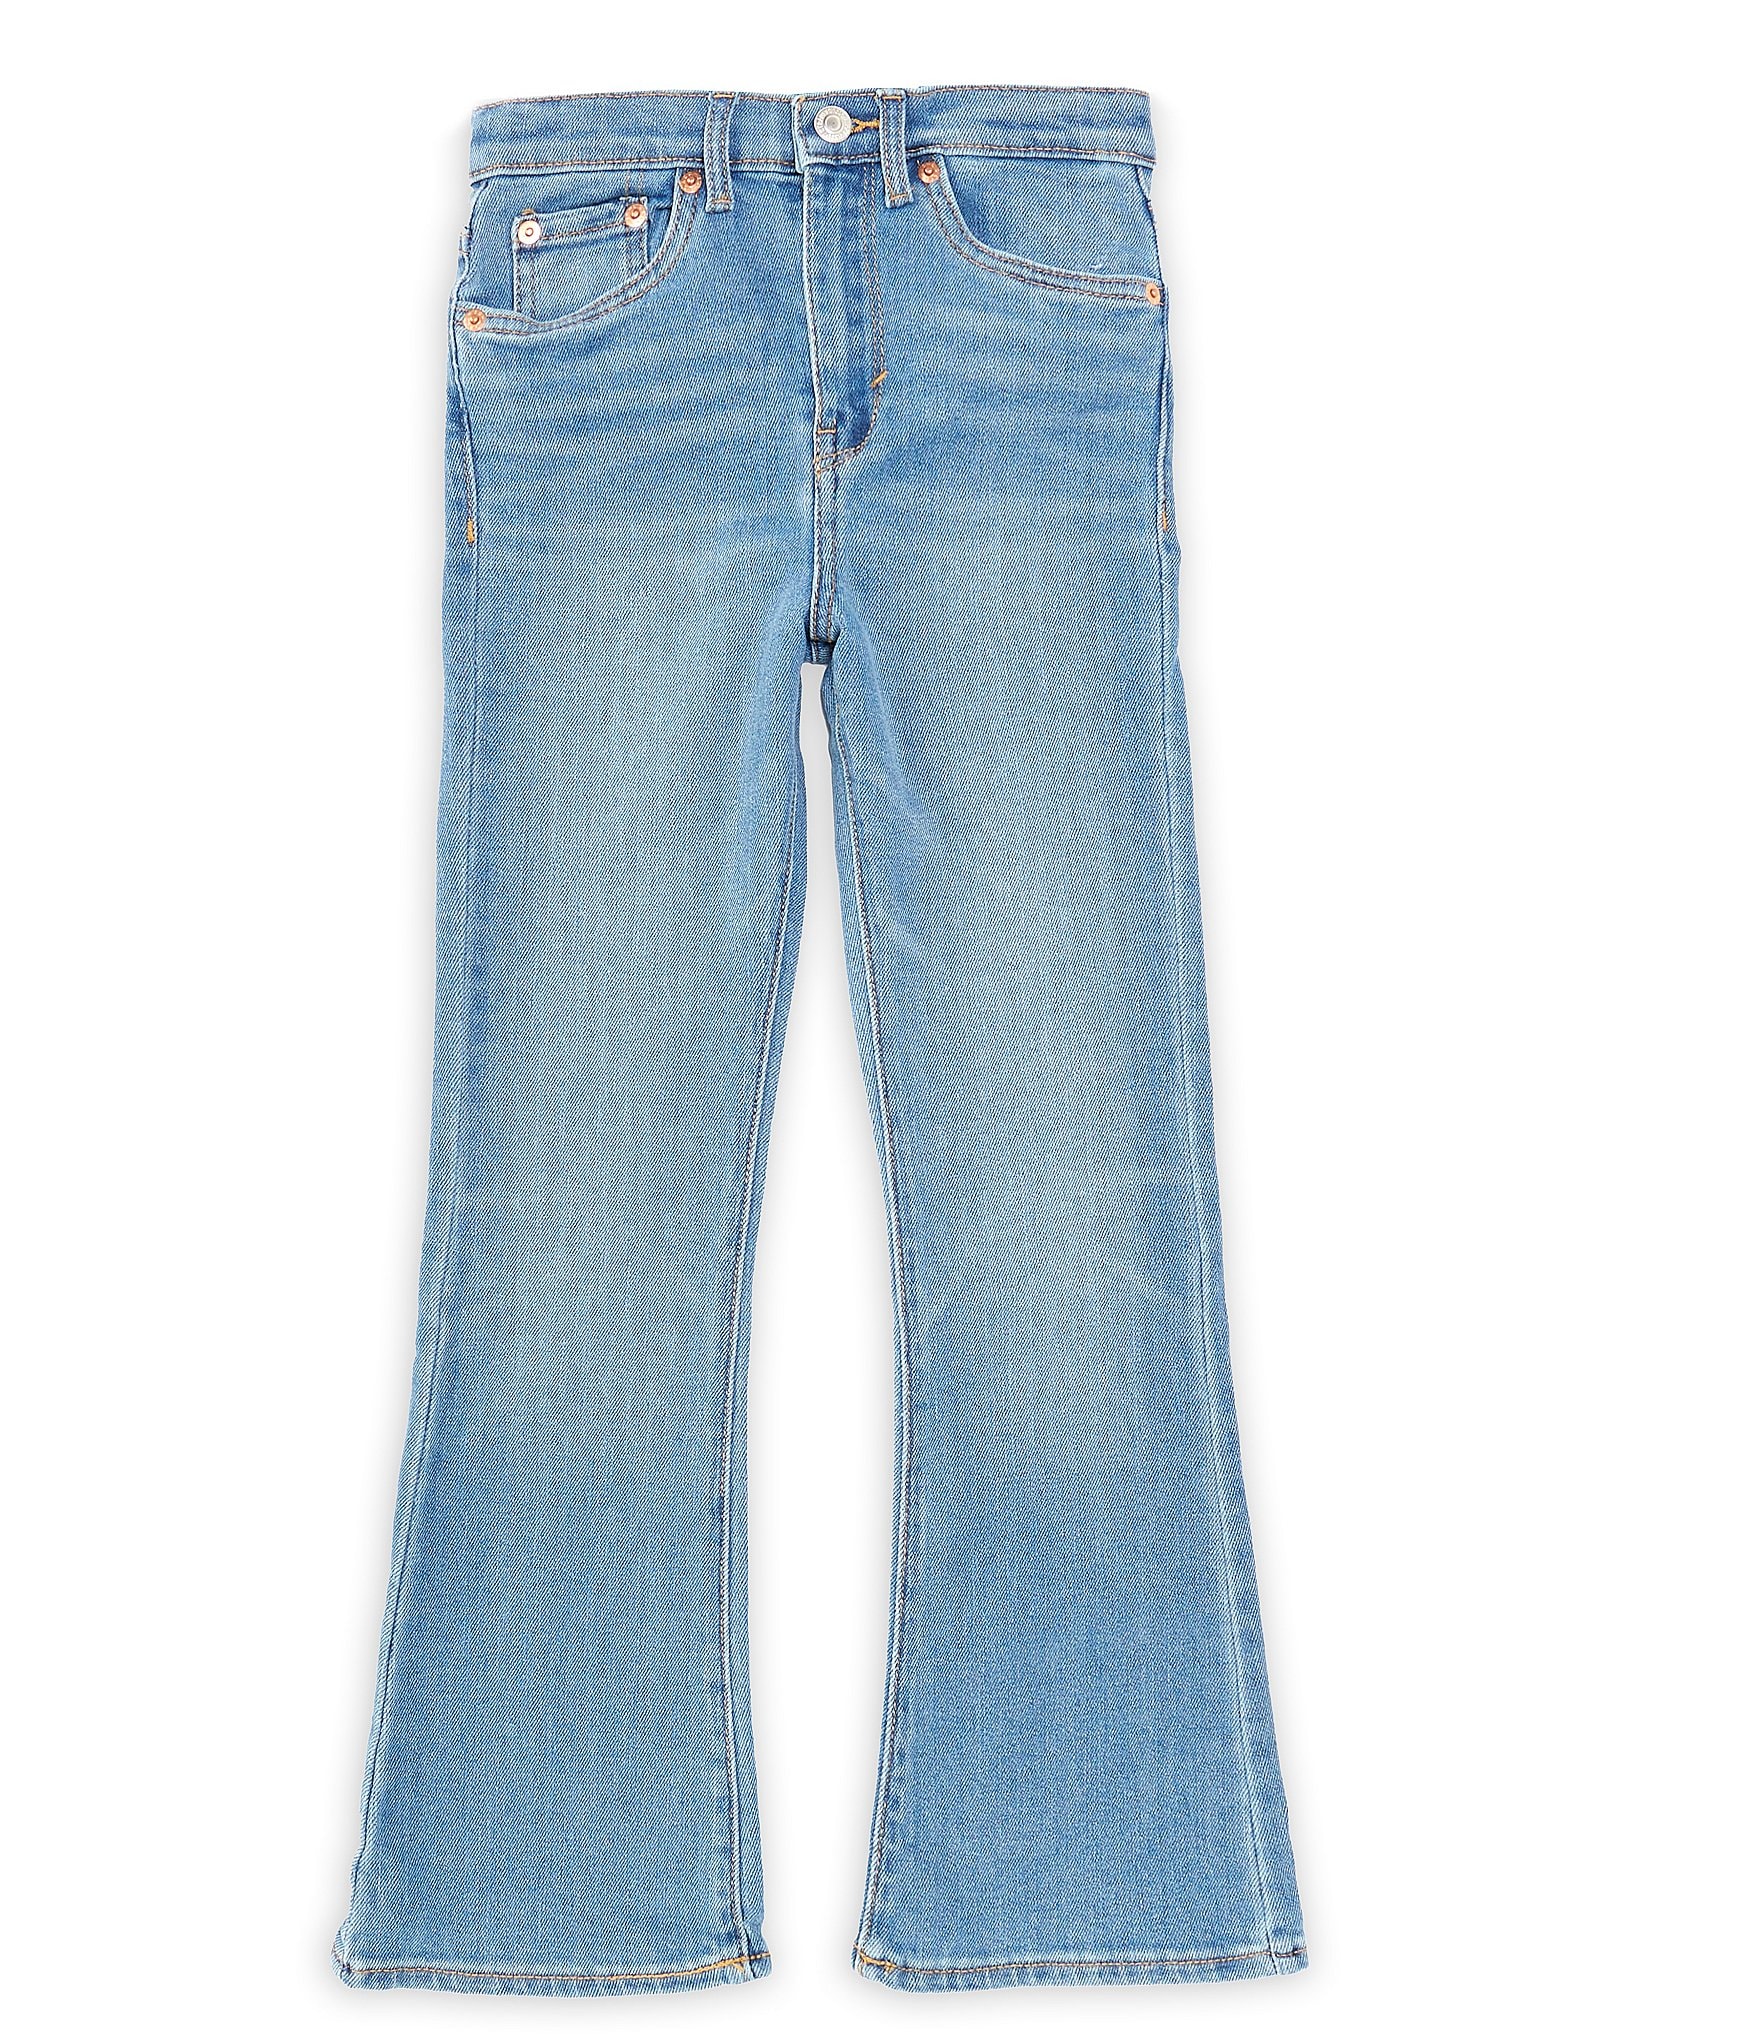 Levi's® Big Girls 7-16 Hi-Rise Flare Jeans